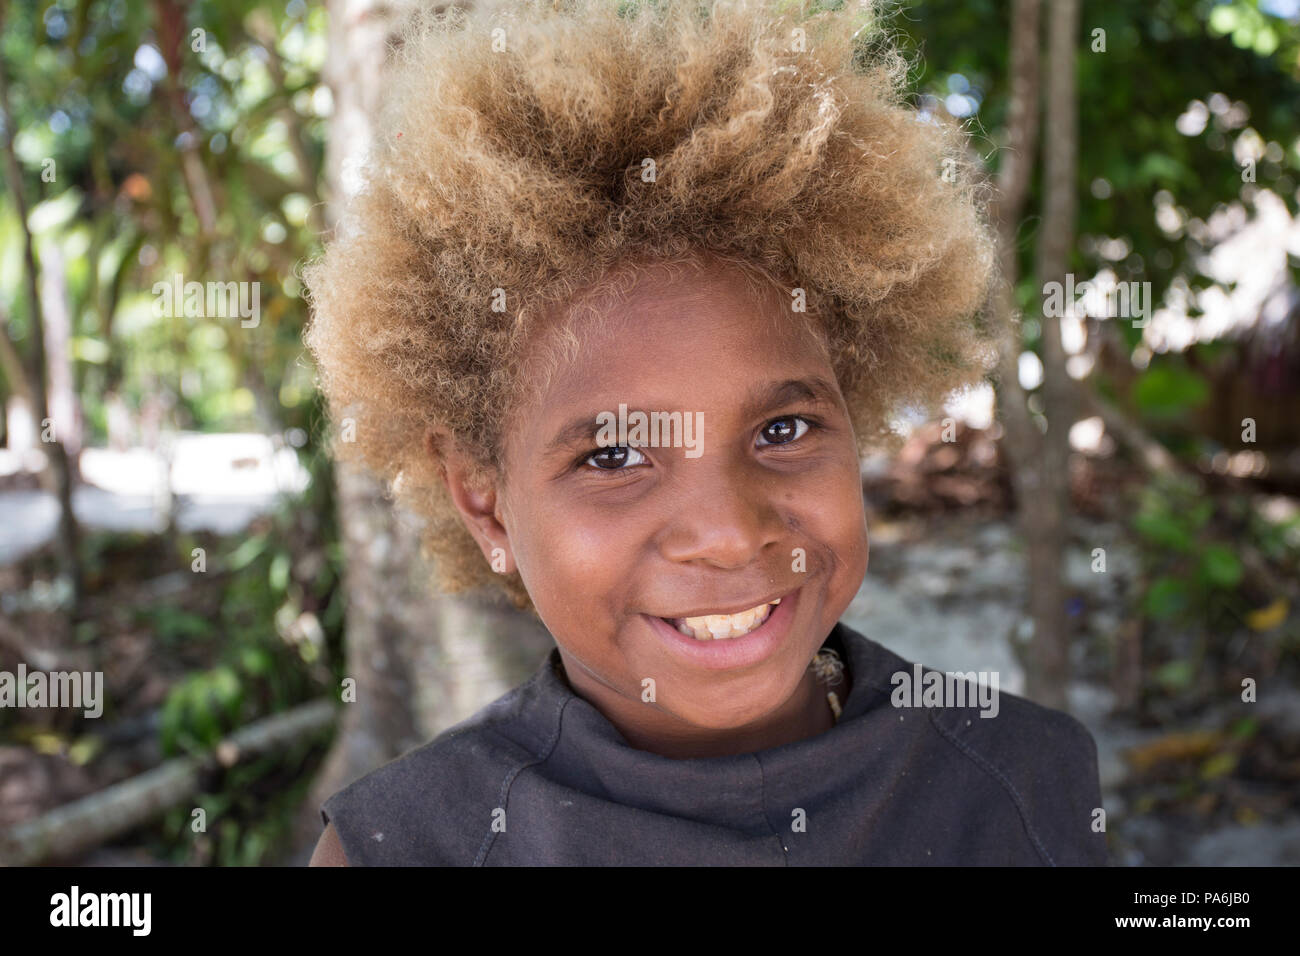 Blonde haired Solomon Island boy Stock Photo